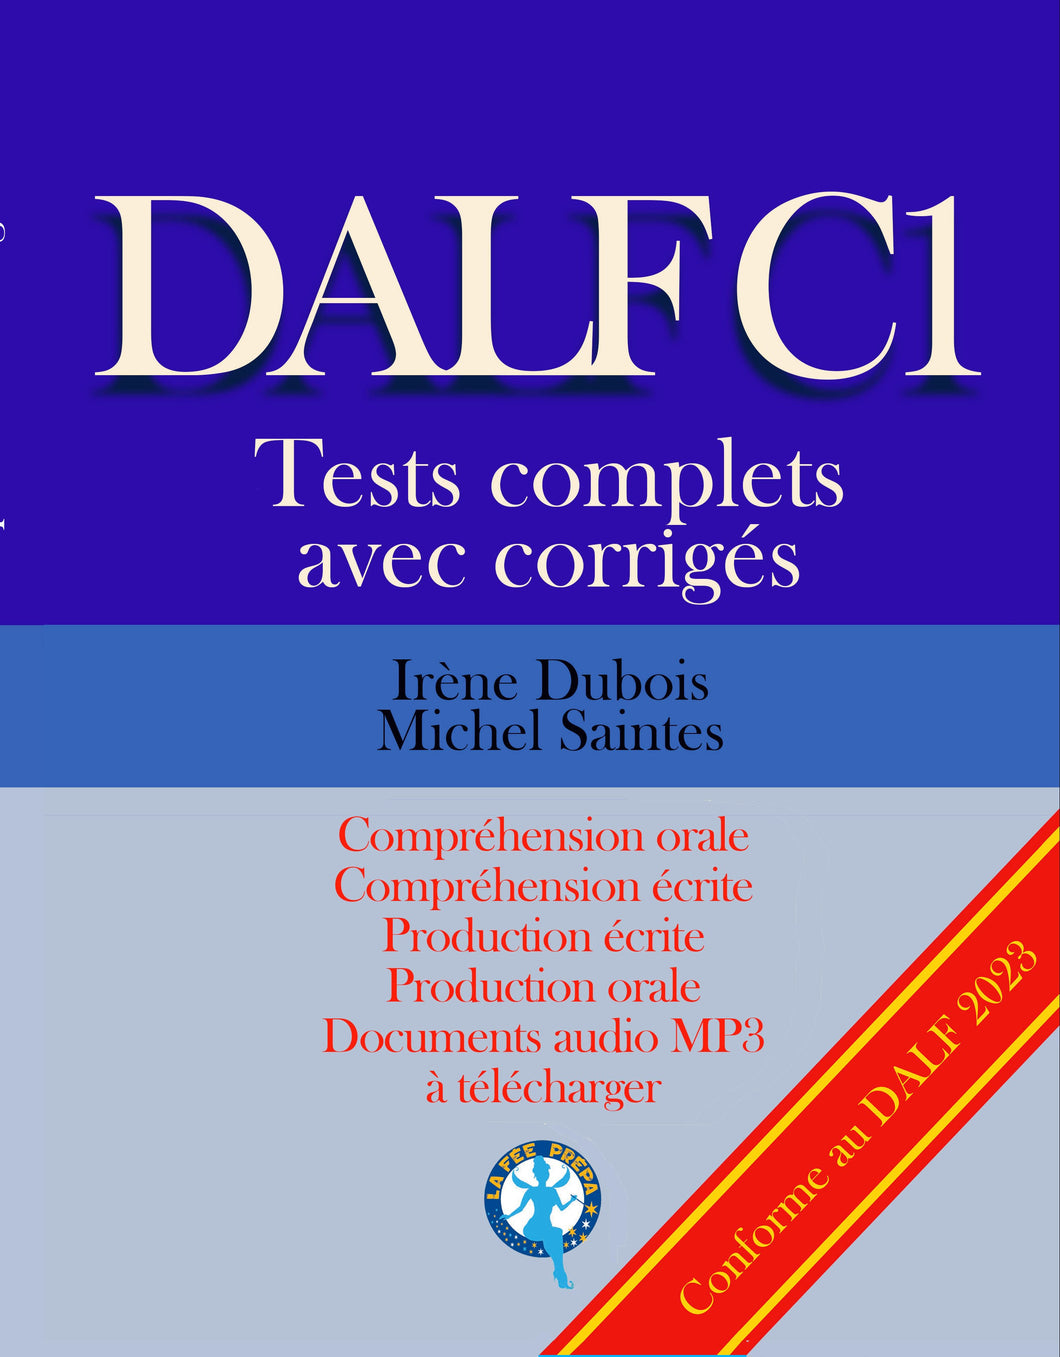 DALF C1 Tests complets corrigés